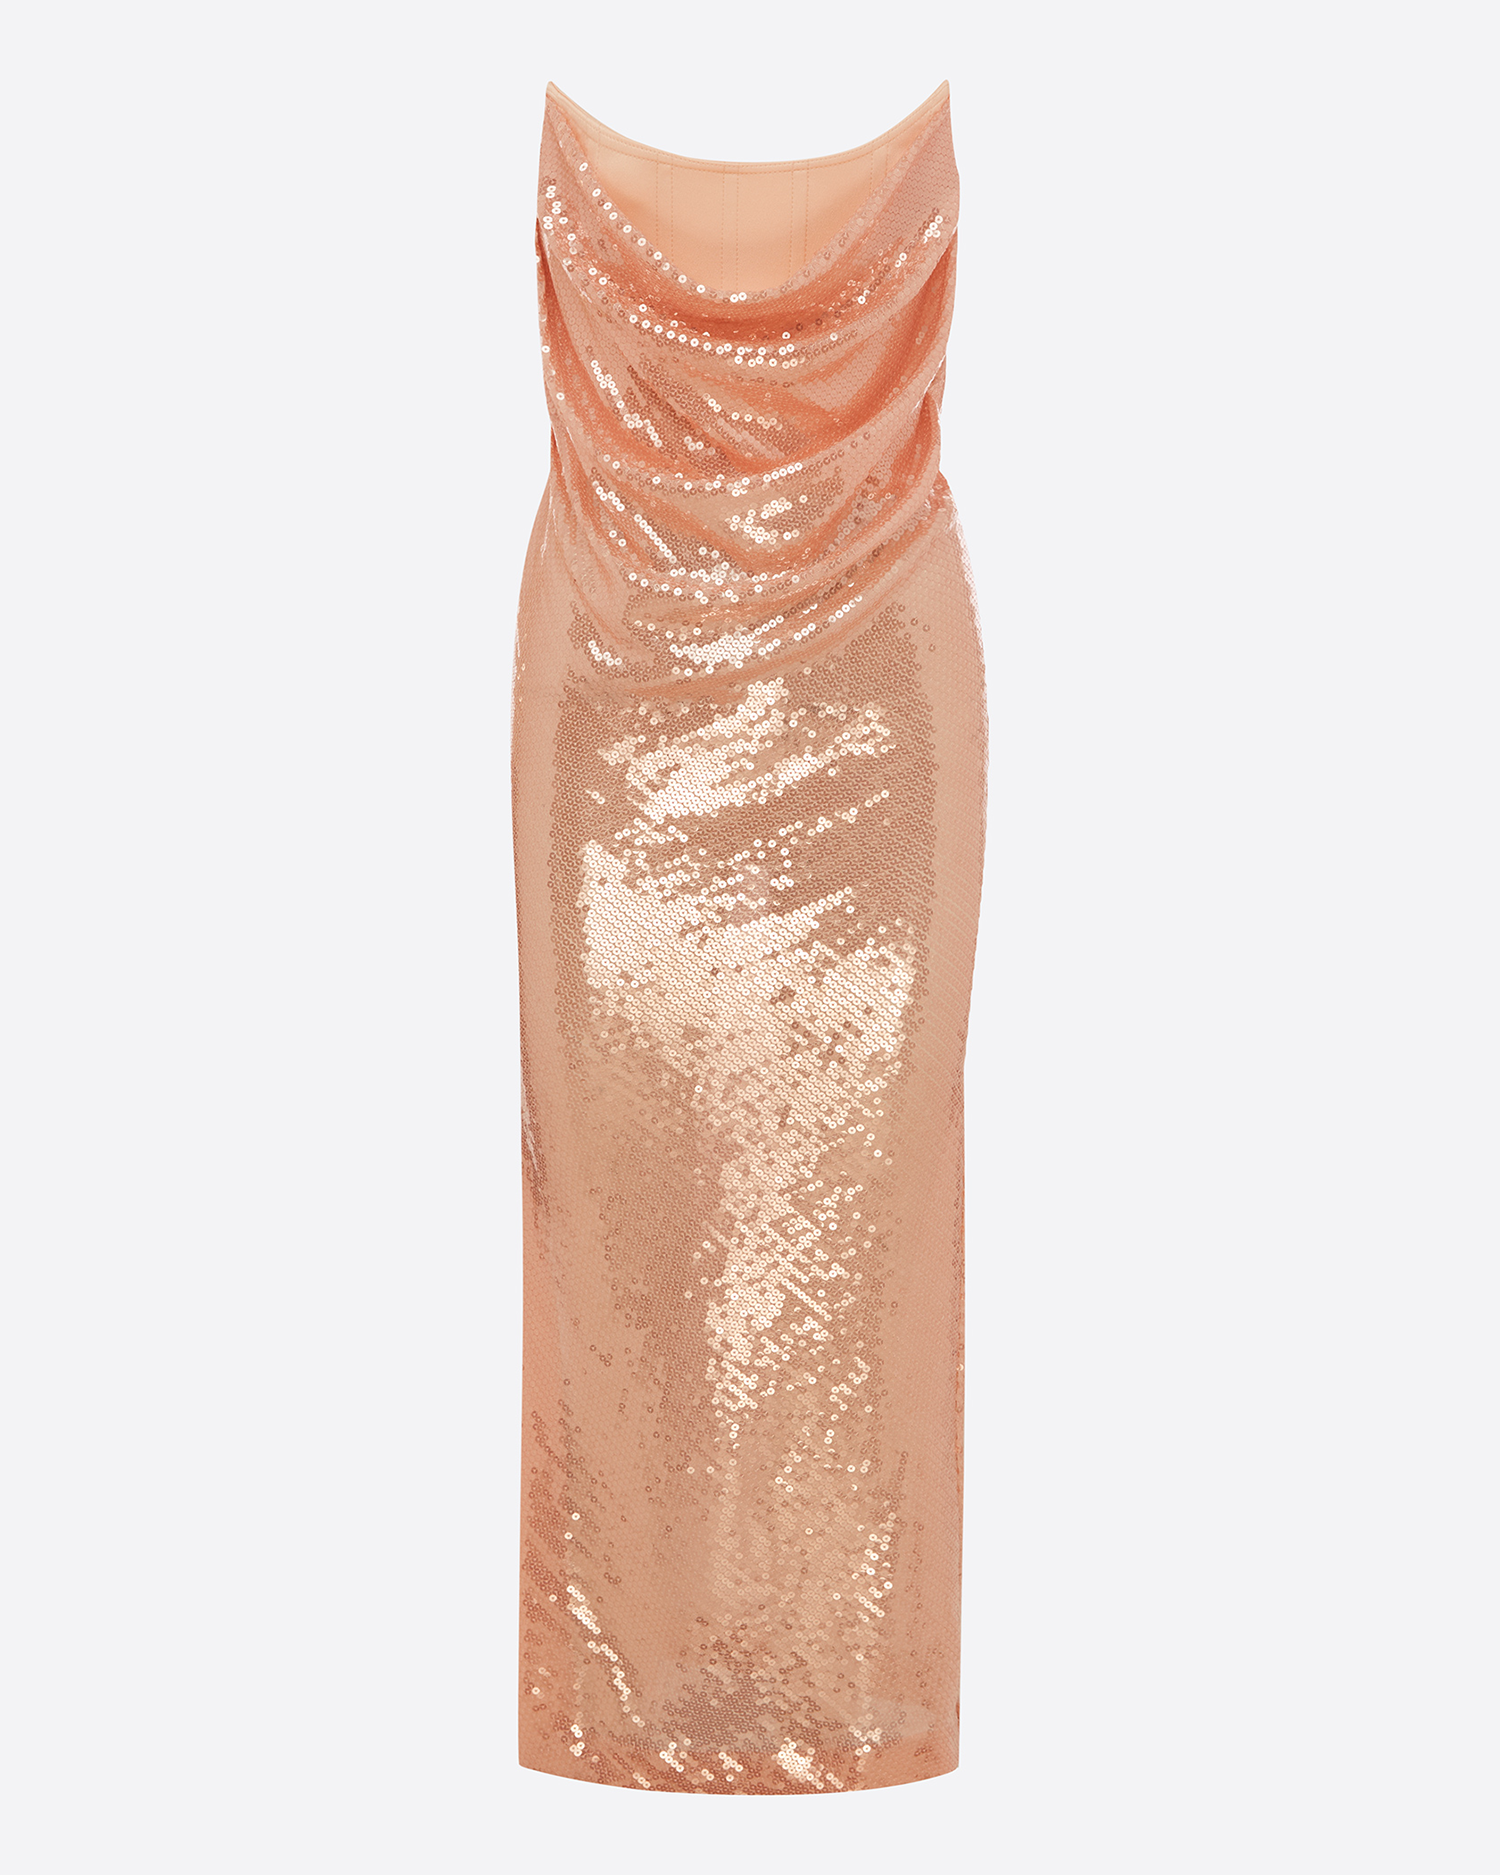 Layered Strapless Drape Corset Dress in Sequin